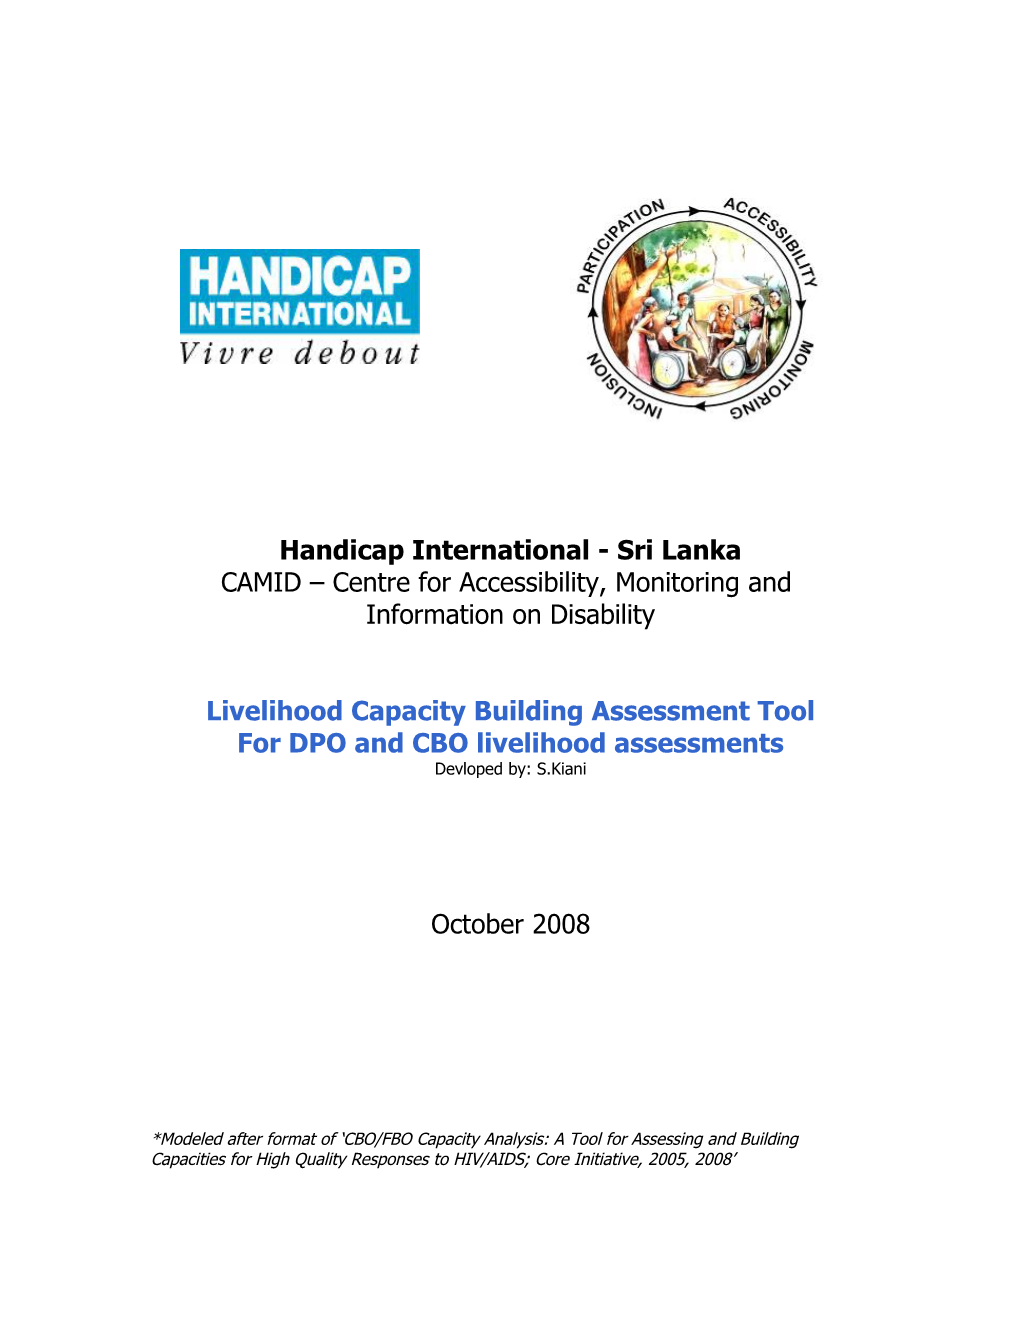 Livelihood Capacity Building Assessment Tool